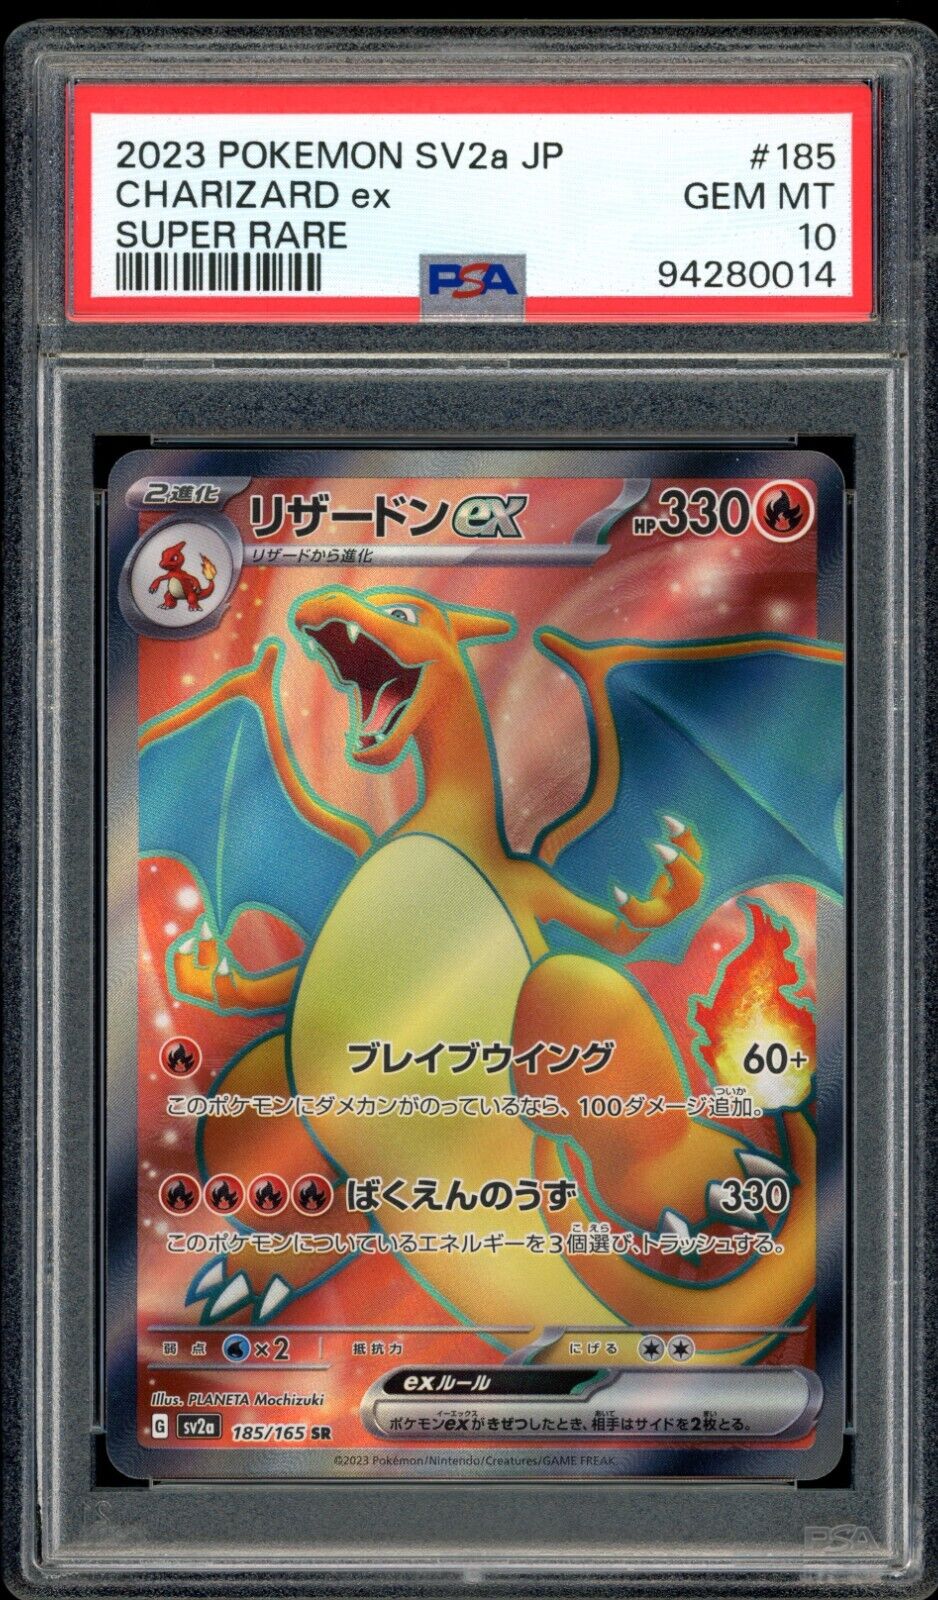 PSA 10 Charizard ex 185/165 Super Rare Pokemon Card 151 Japanese GEM MINT